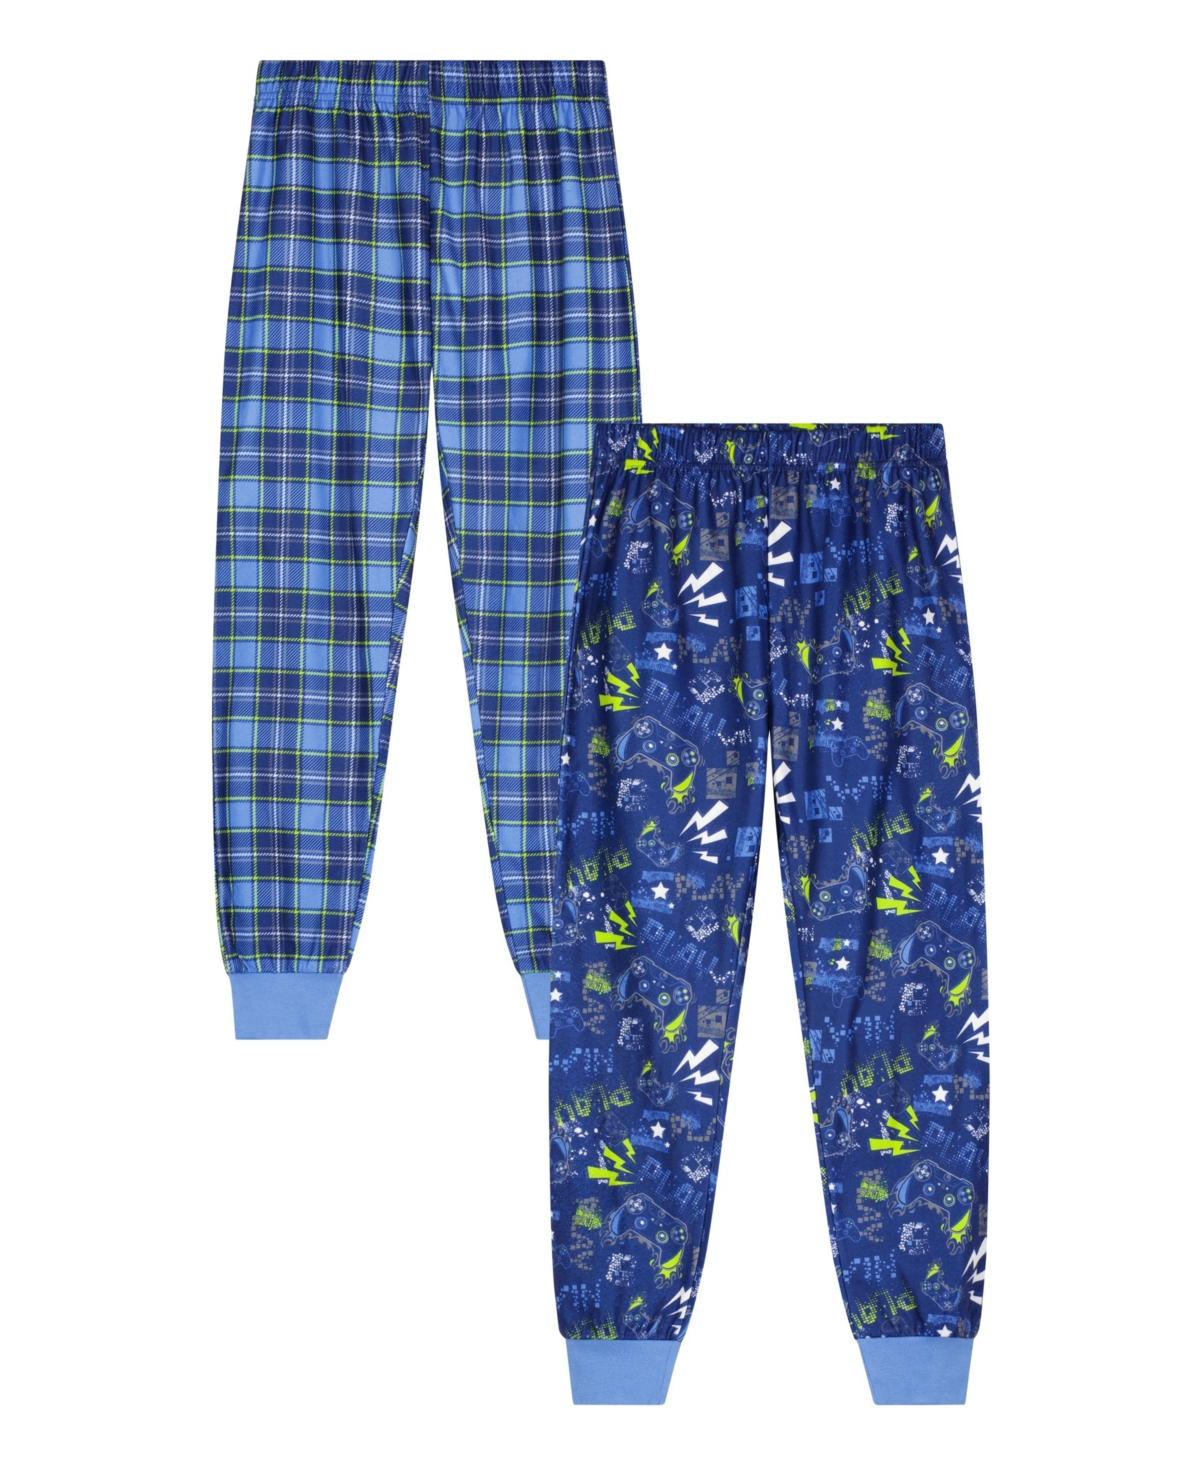 Max & Olivia Big Boys 2 Pack Pajama Pants Set, 2 Pieces In Blue